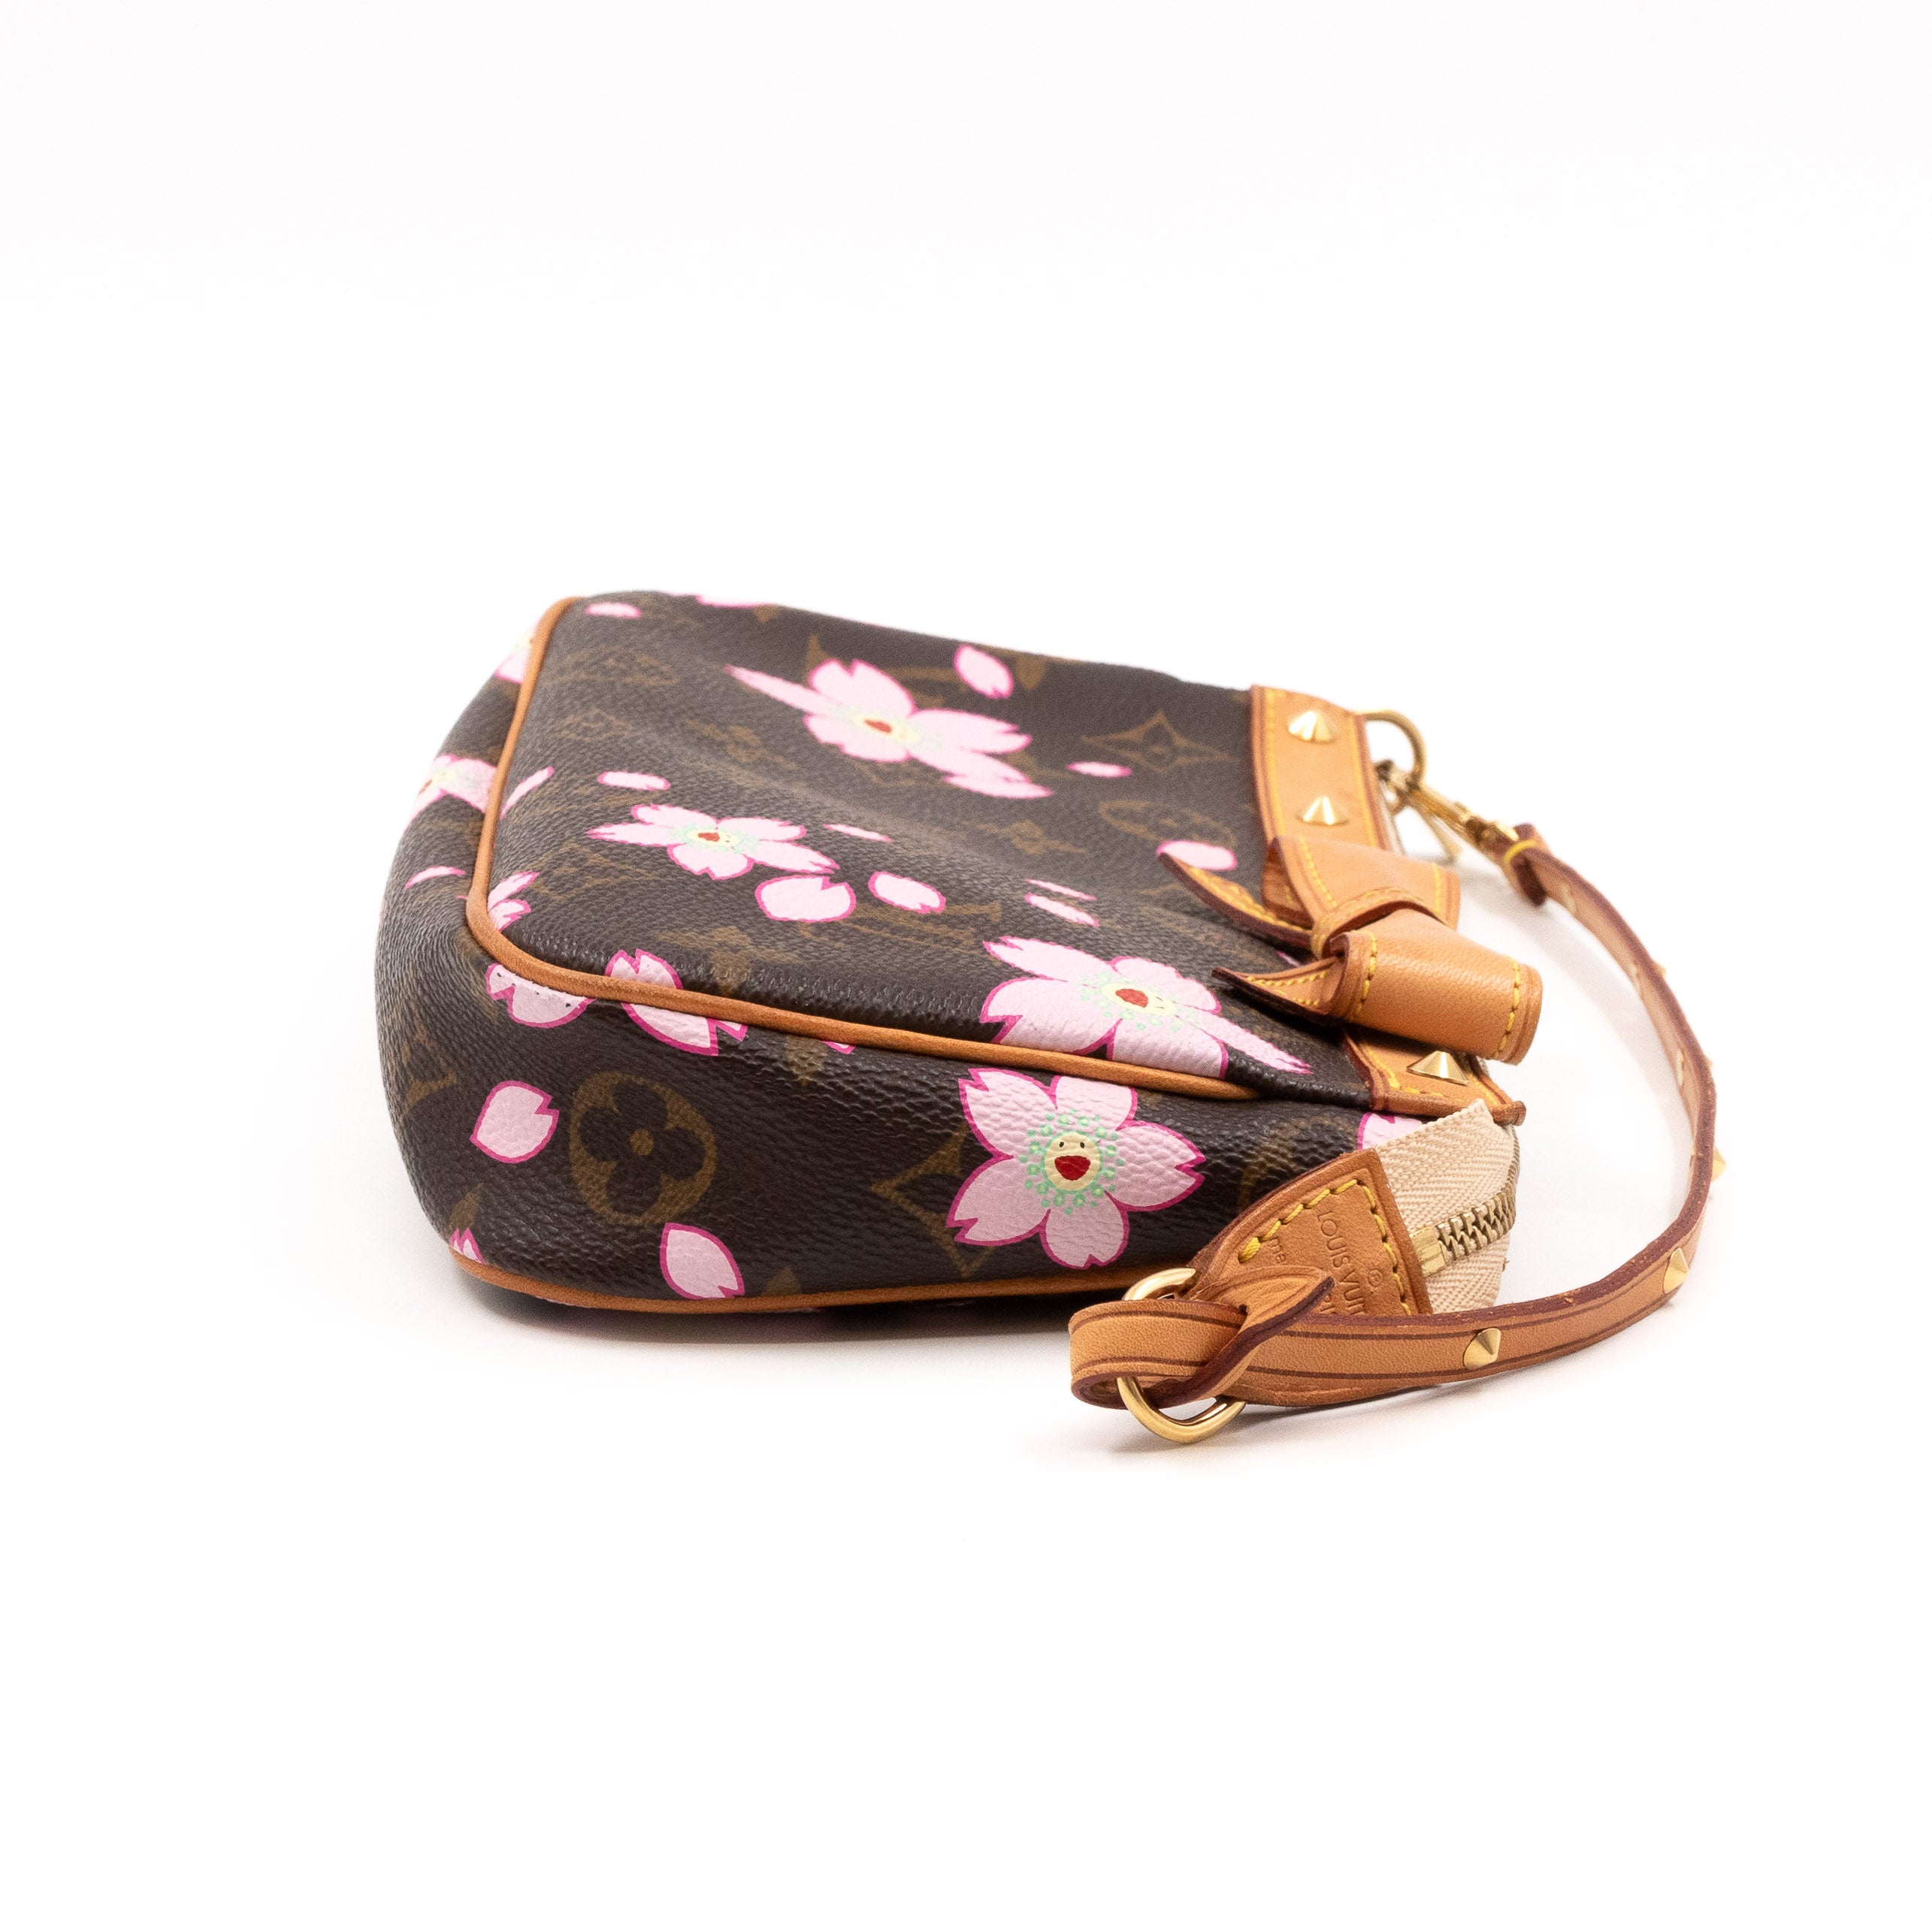 FWRD Renew Louis Vuitton Monogram Cherry Blossom Pouch Bag in Pink | FWRD